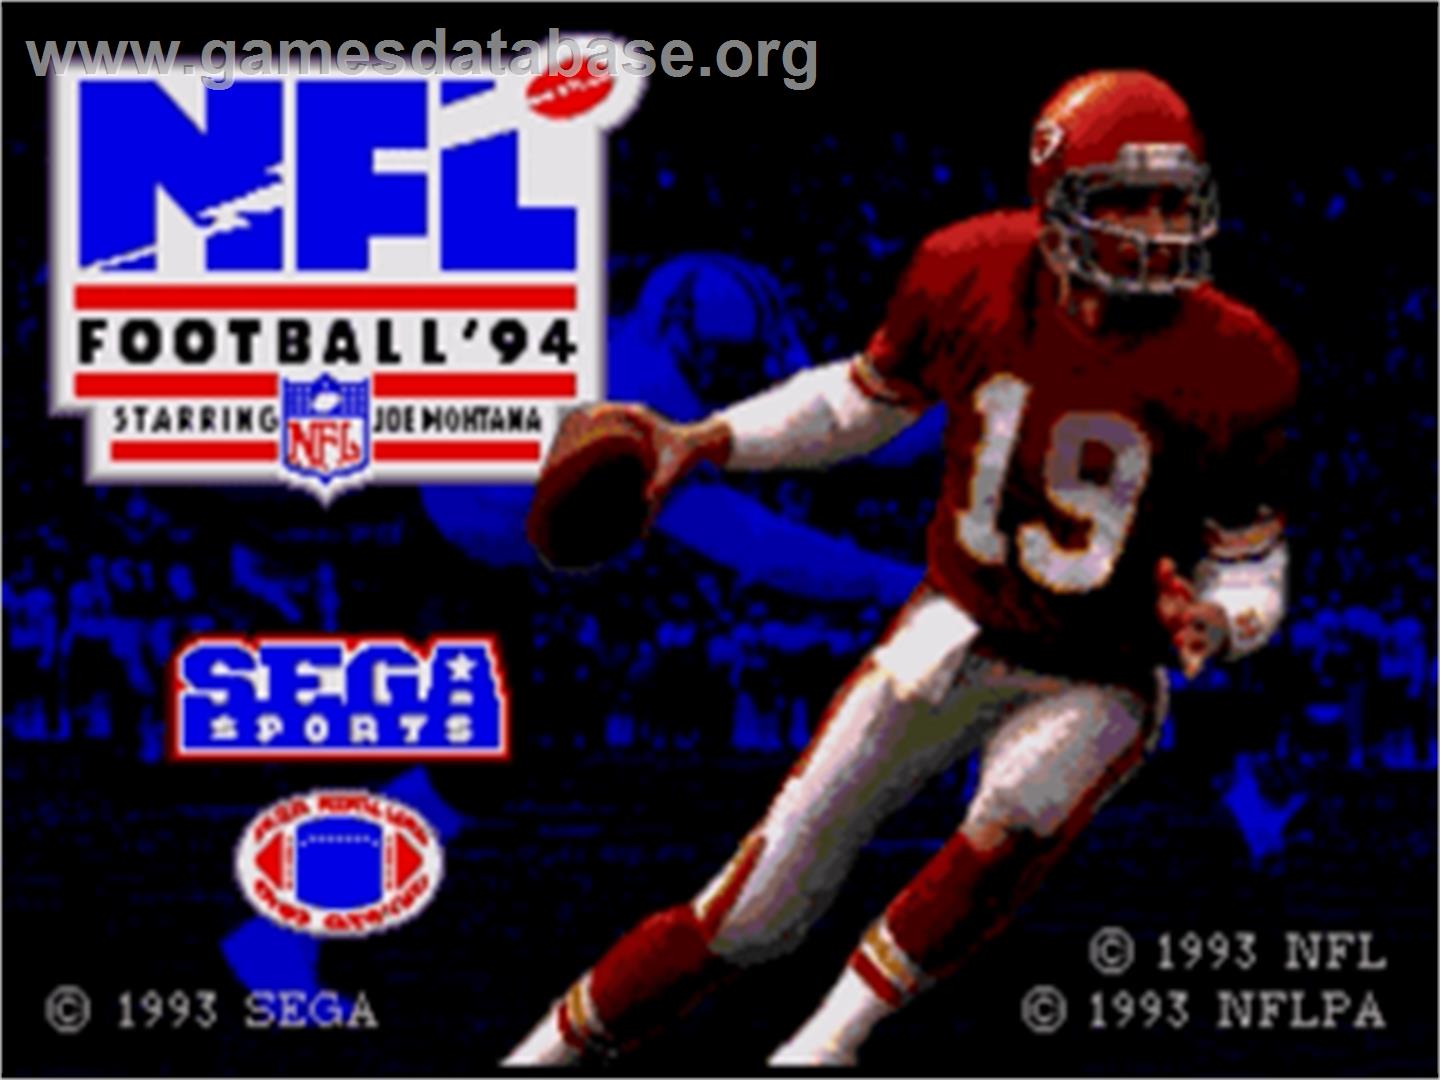 NFL Football '94 Starring Joe Montana - Sega Nomad - Artwork - Title Screen